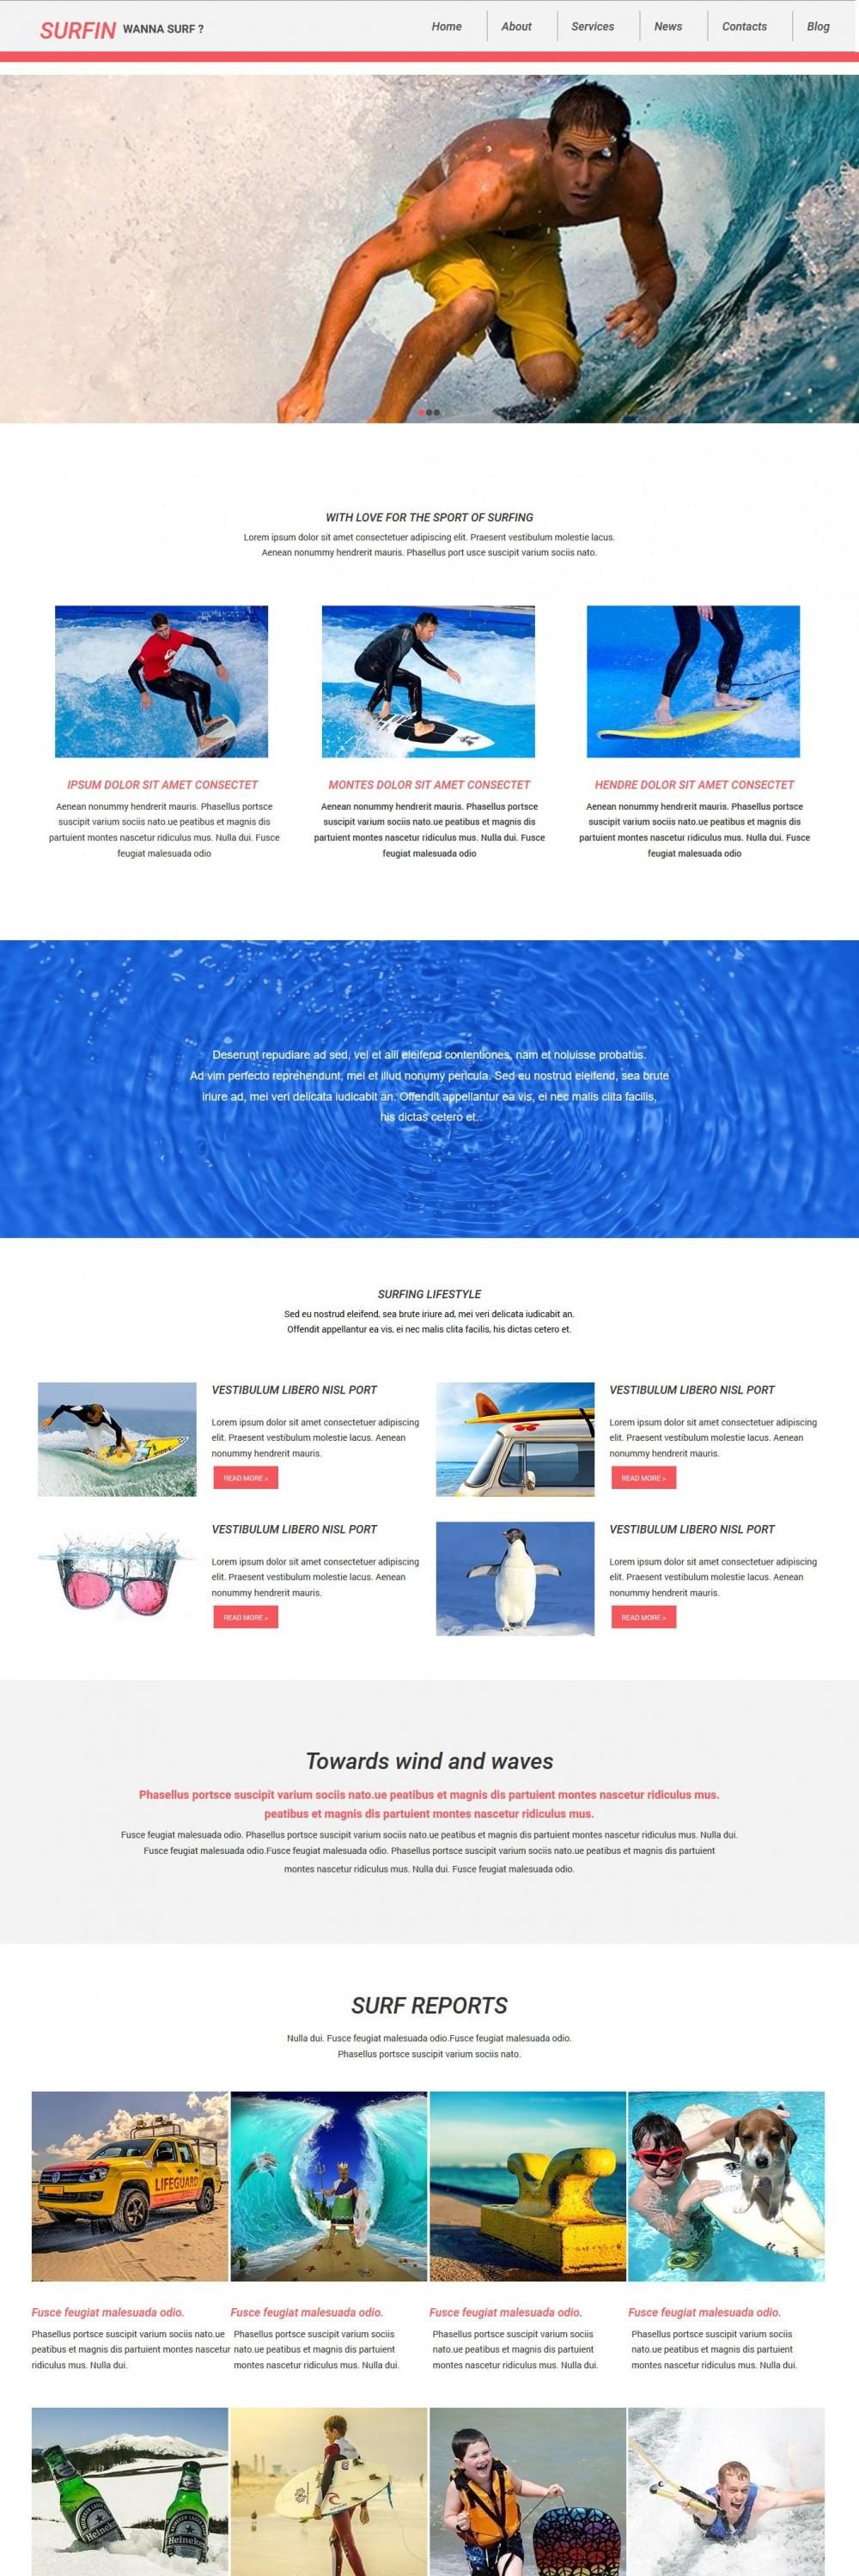 Surfin - Free WordPress Theme For Surfin Club/Sports